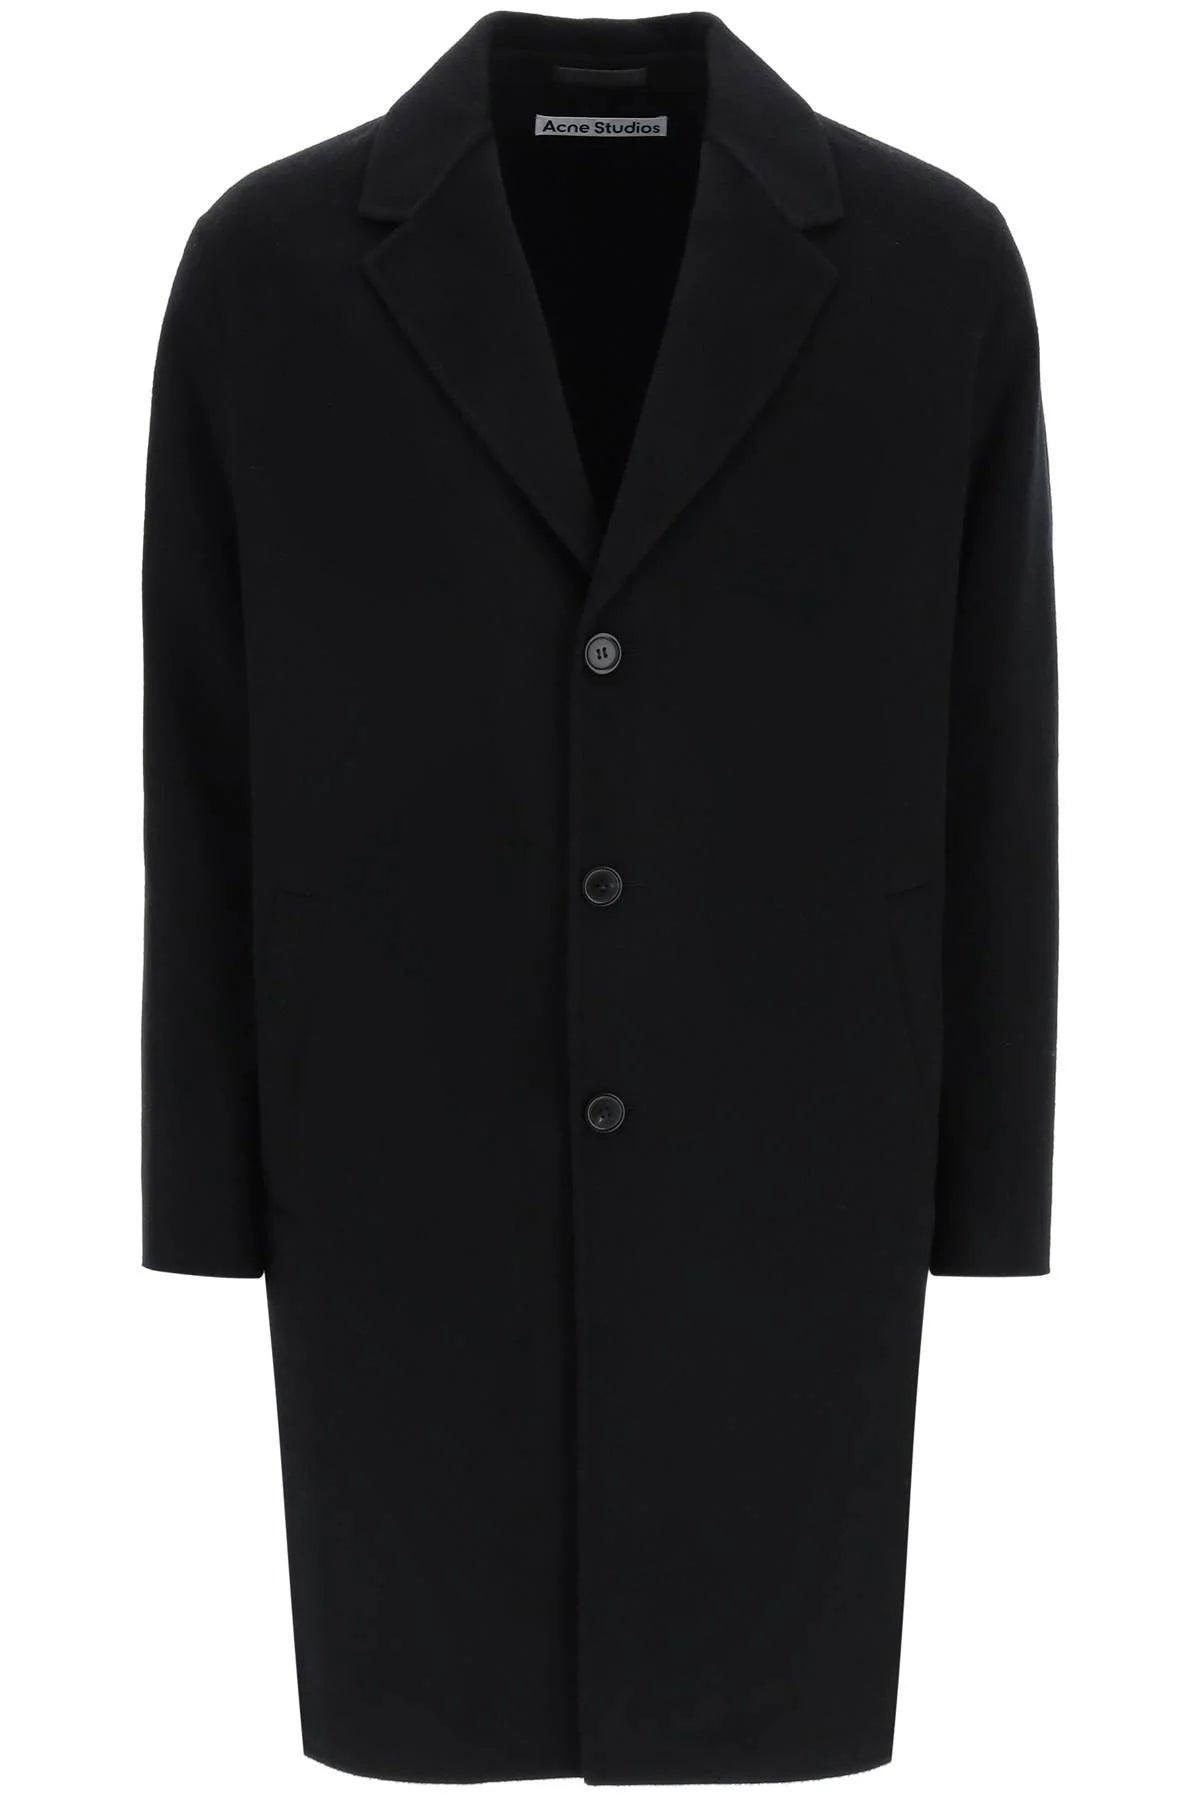 Acne Studios Double Wool Oversized Coat in Black for Men | Lyst